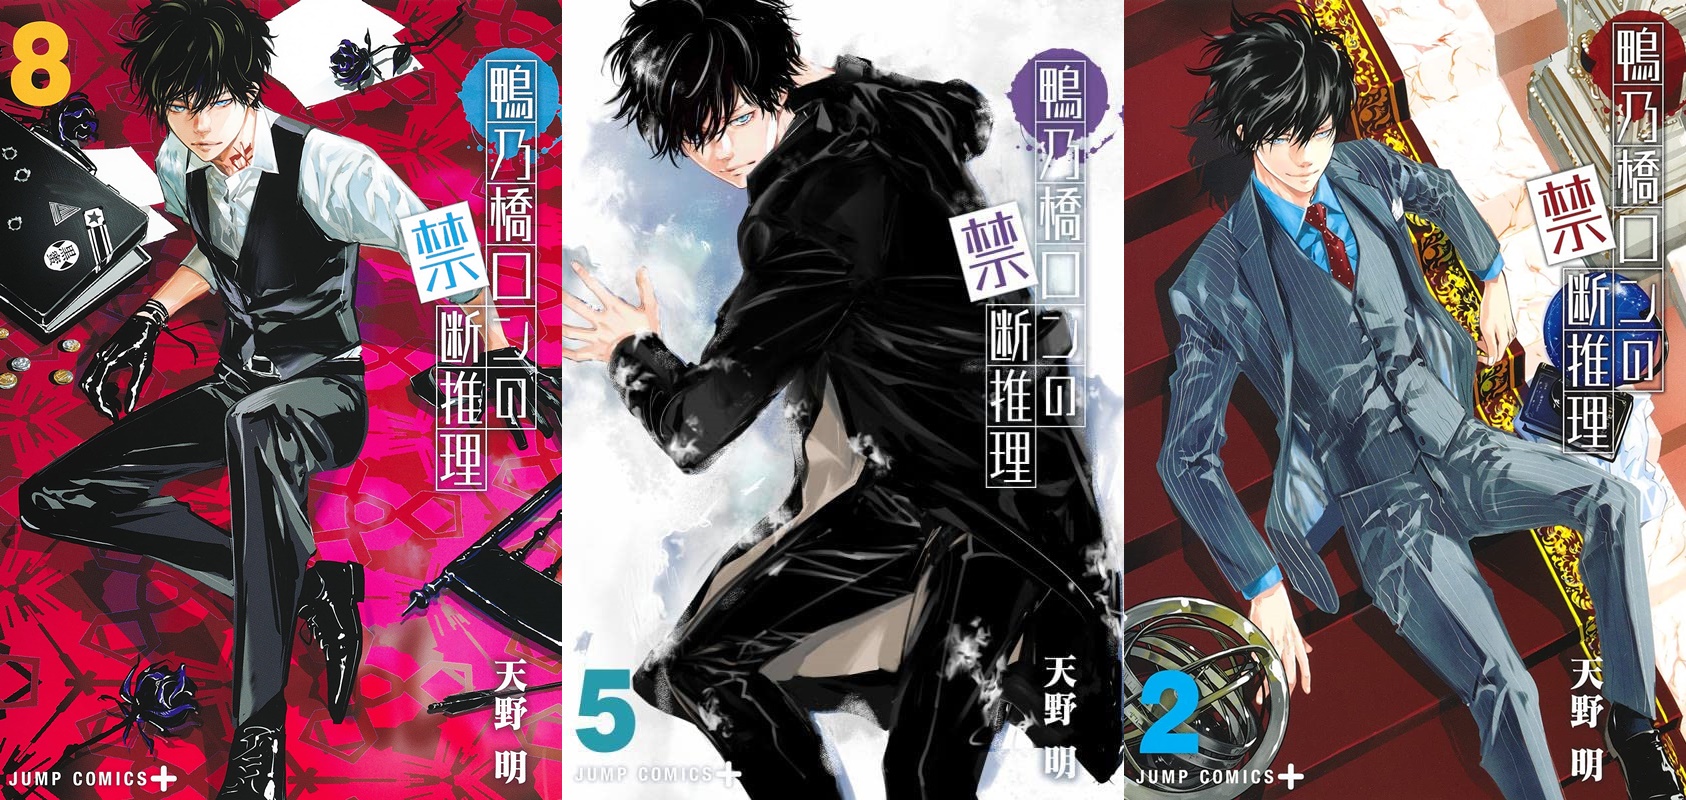 Anime/Manga Review: Katekyo Hitman Reborn